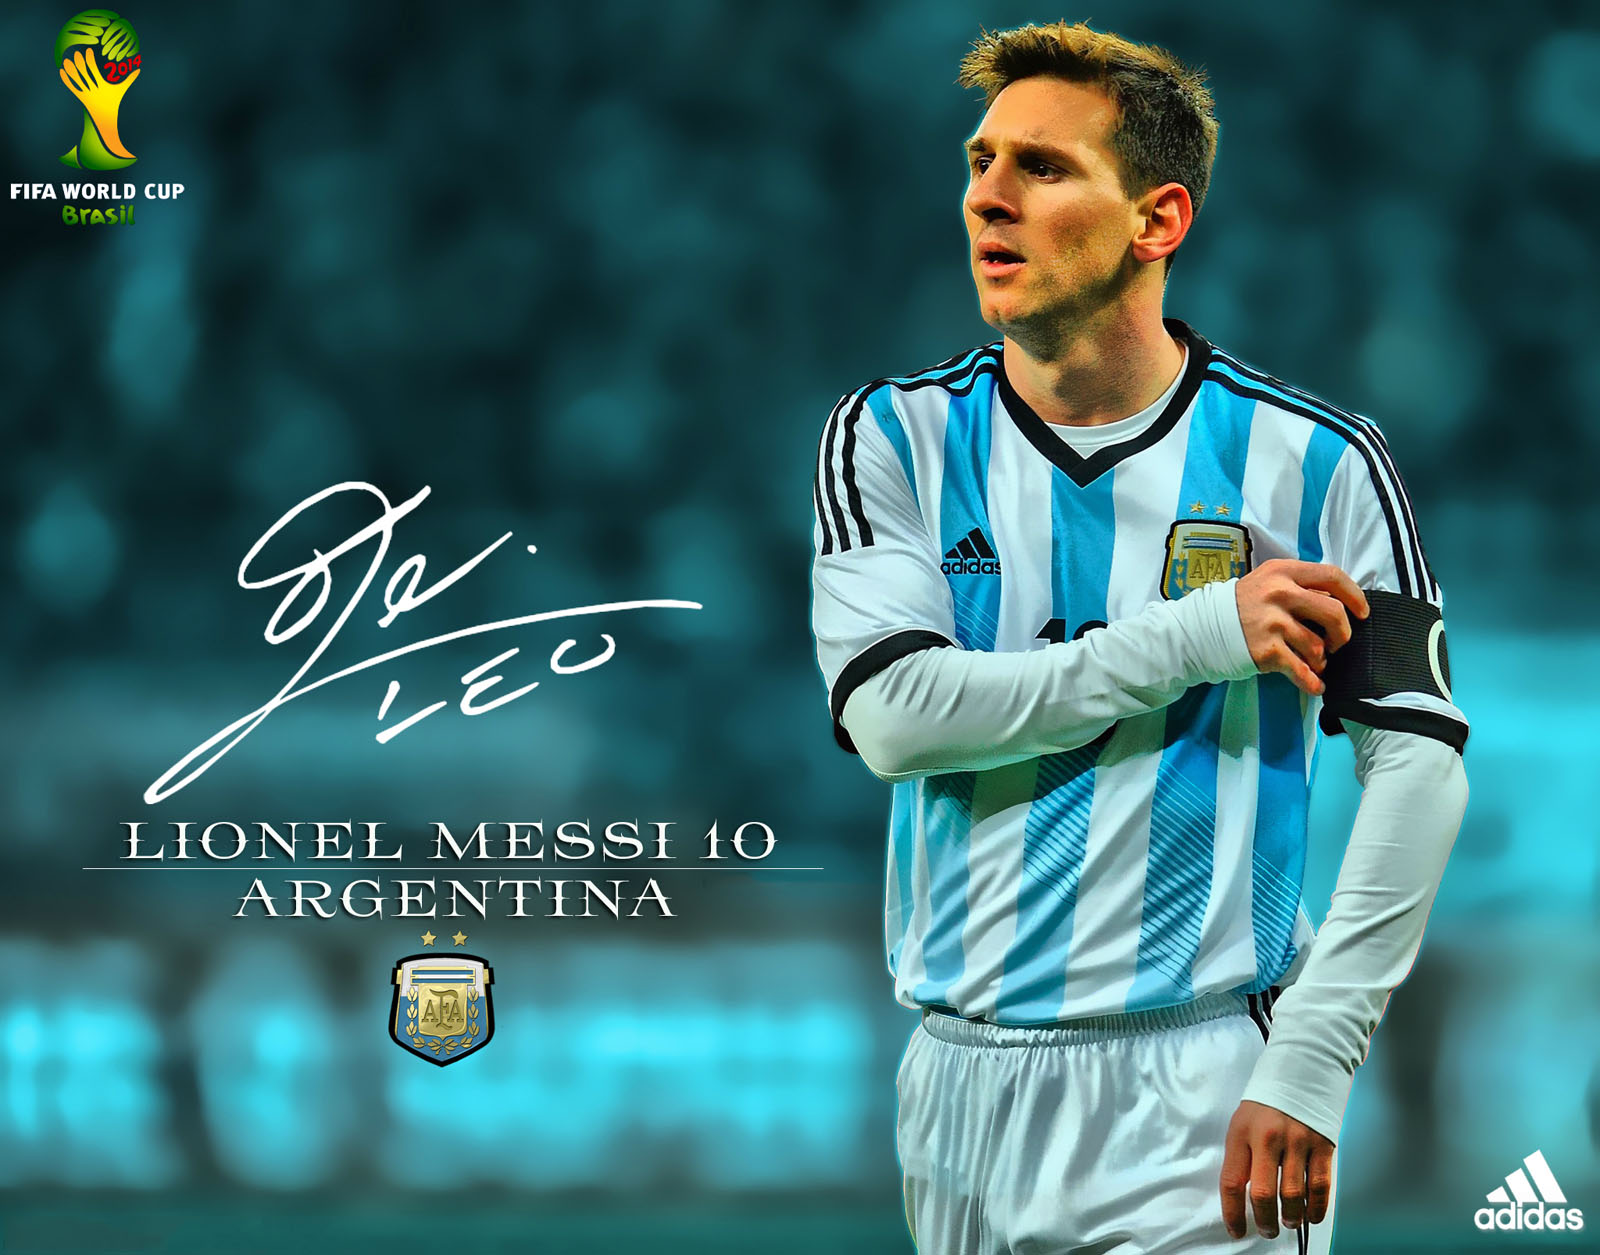 Lionel Messi Argentina Fifa World Cup 2014 Wallpaper - Argentina Lionel Messi - HD Wallpaper 